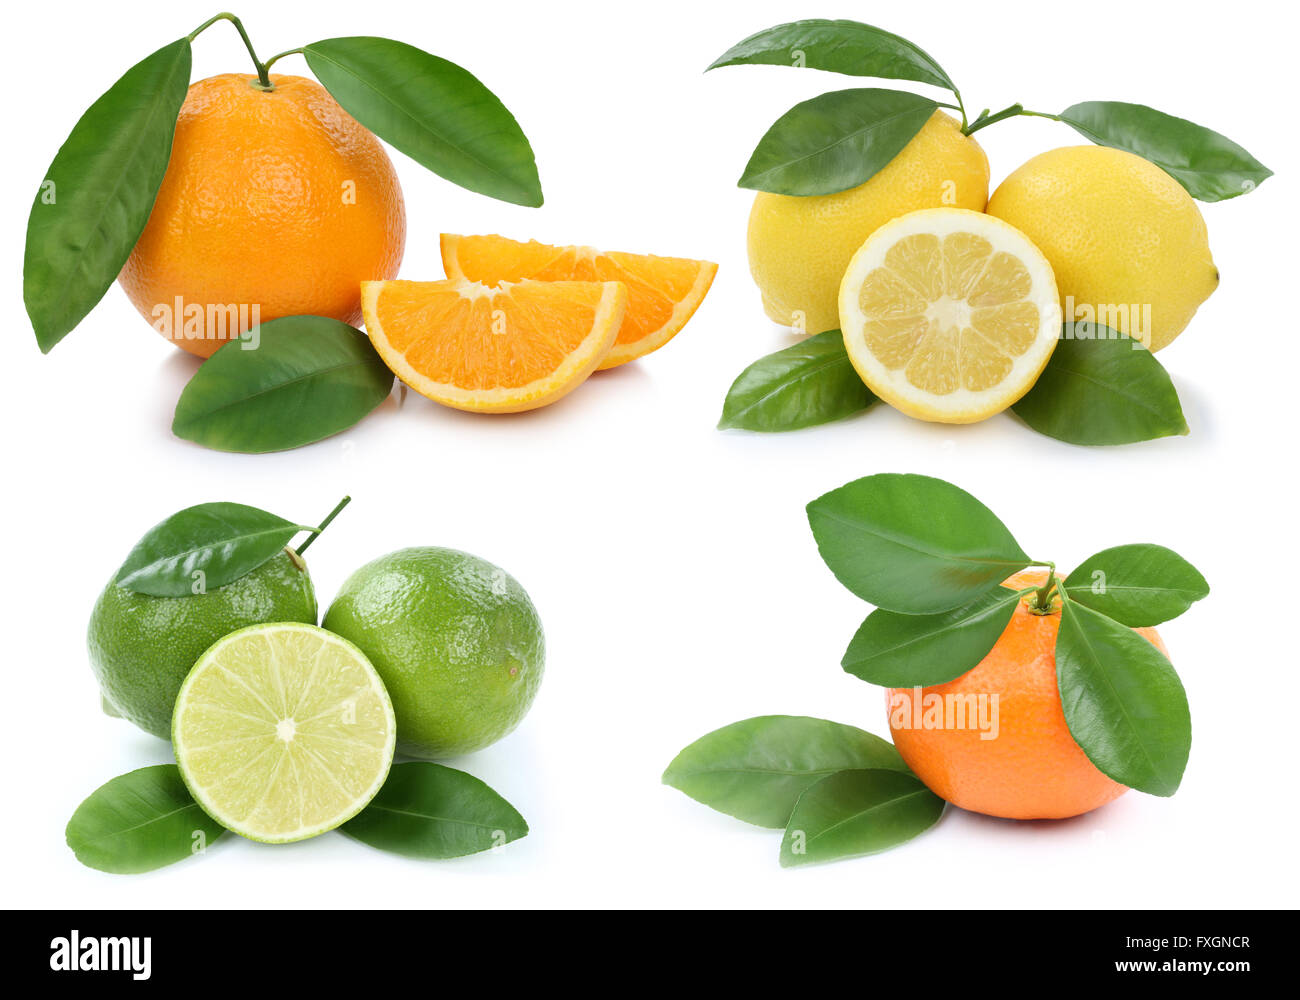 Collection of oranges mandarin lemon organic fruits isolated on a white background Stock Photo